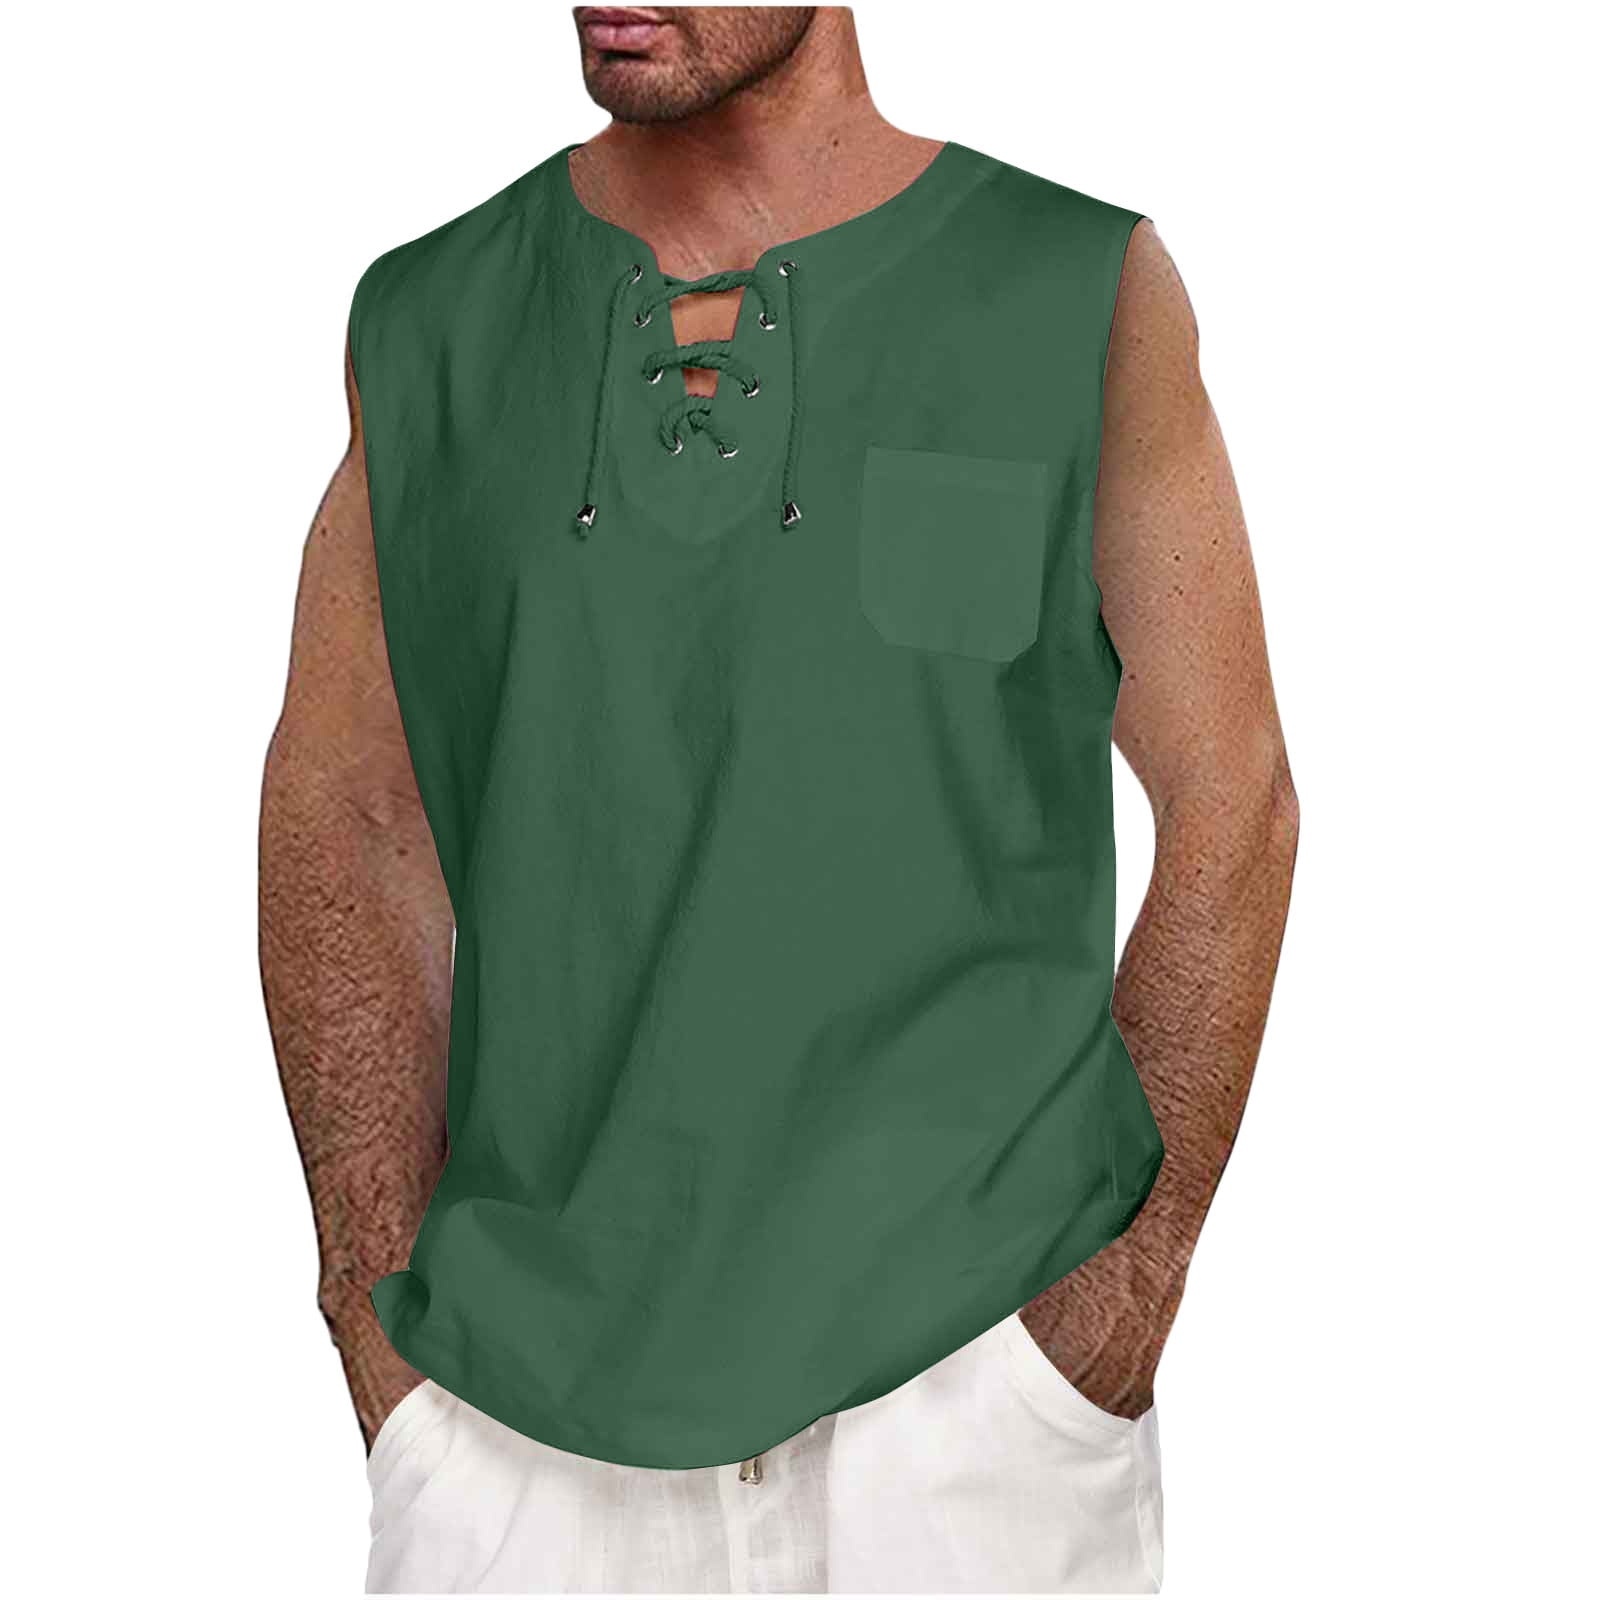 Clearance Hfyihgf Men's Cotton Linen Tank Top Shirts Casual Stylish ...